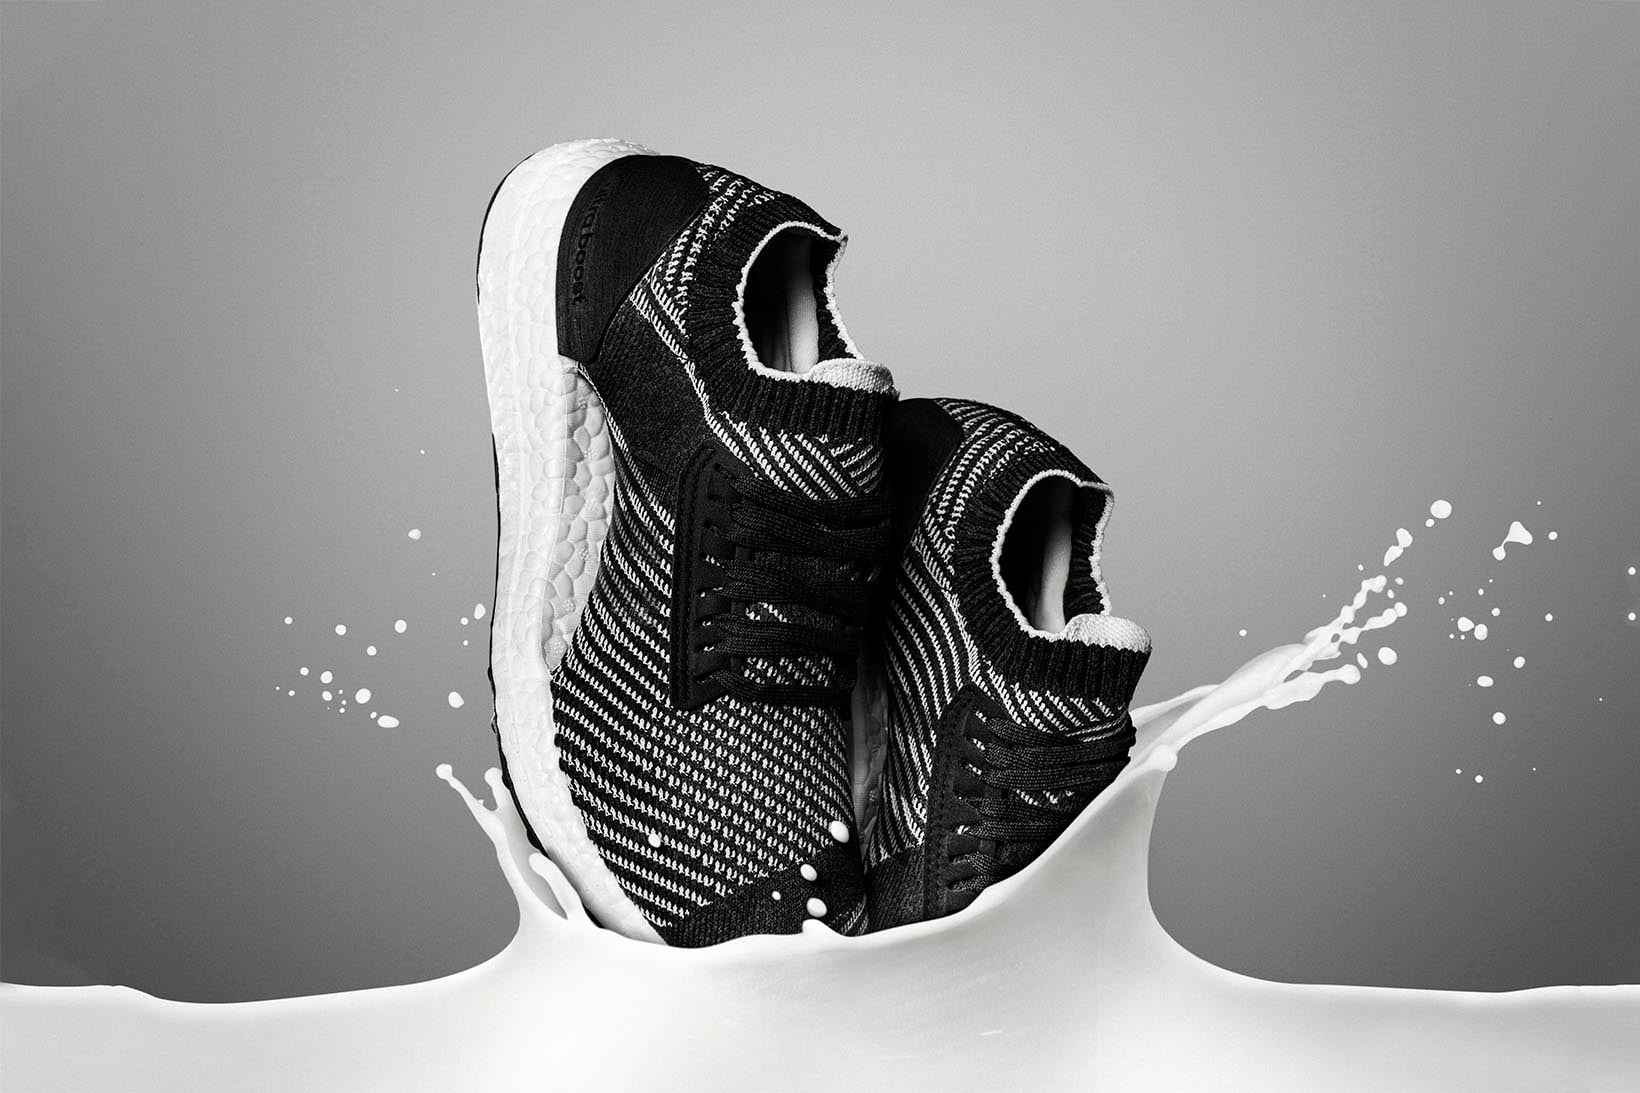 adidas unveils UltraBOOST X in Cookies & Cream womens ladies sneakers oreo milk carton box black white primeknit